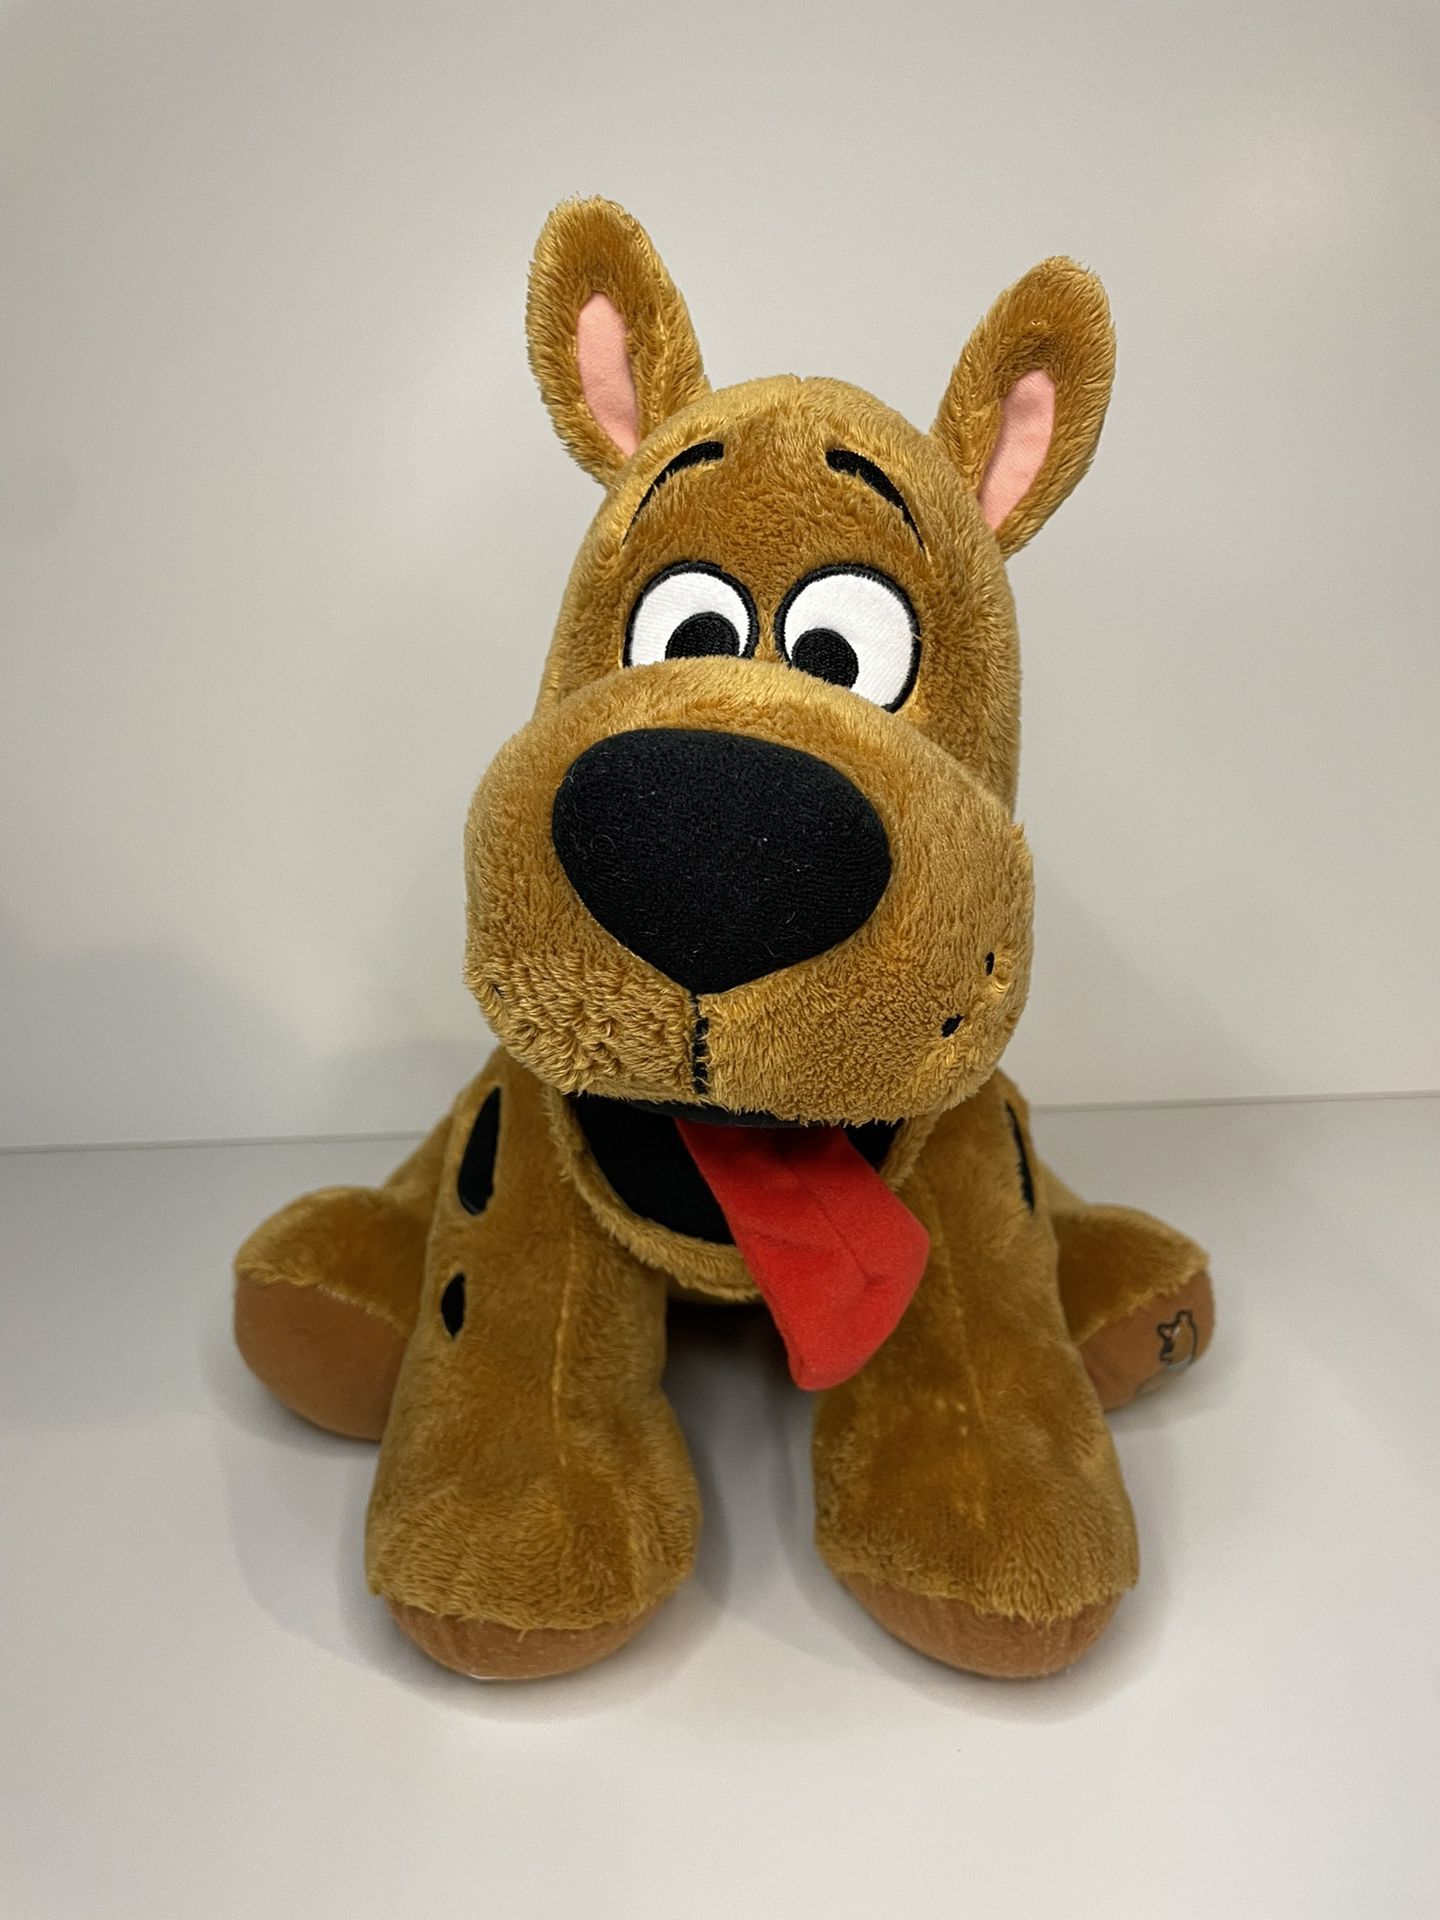 Scooby Doo build a bear plush